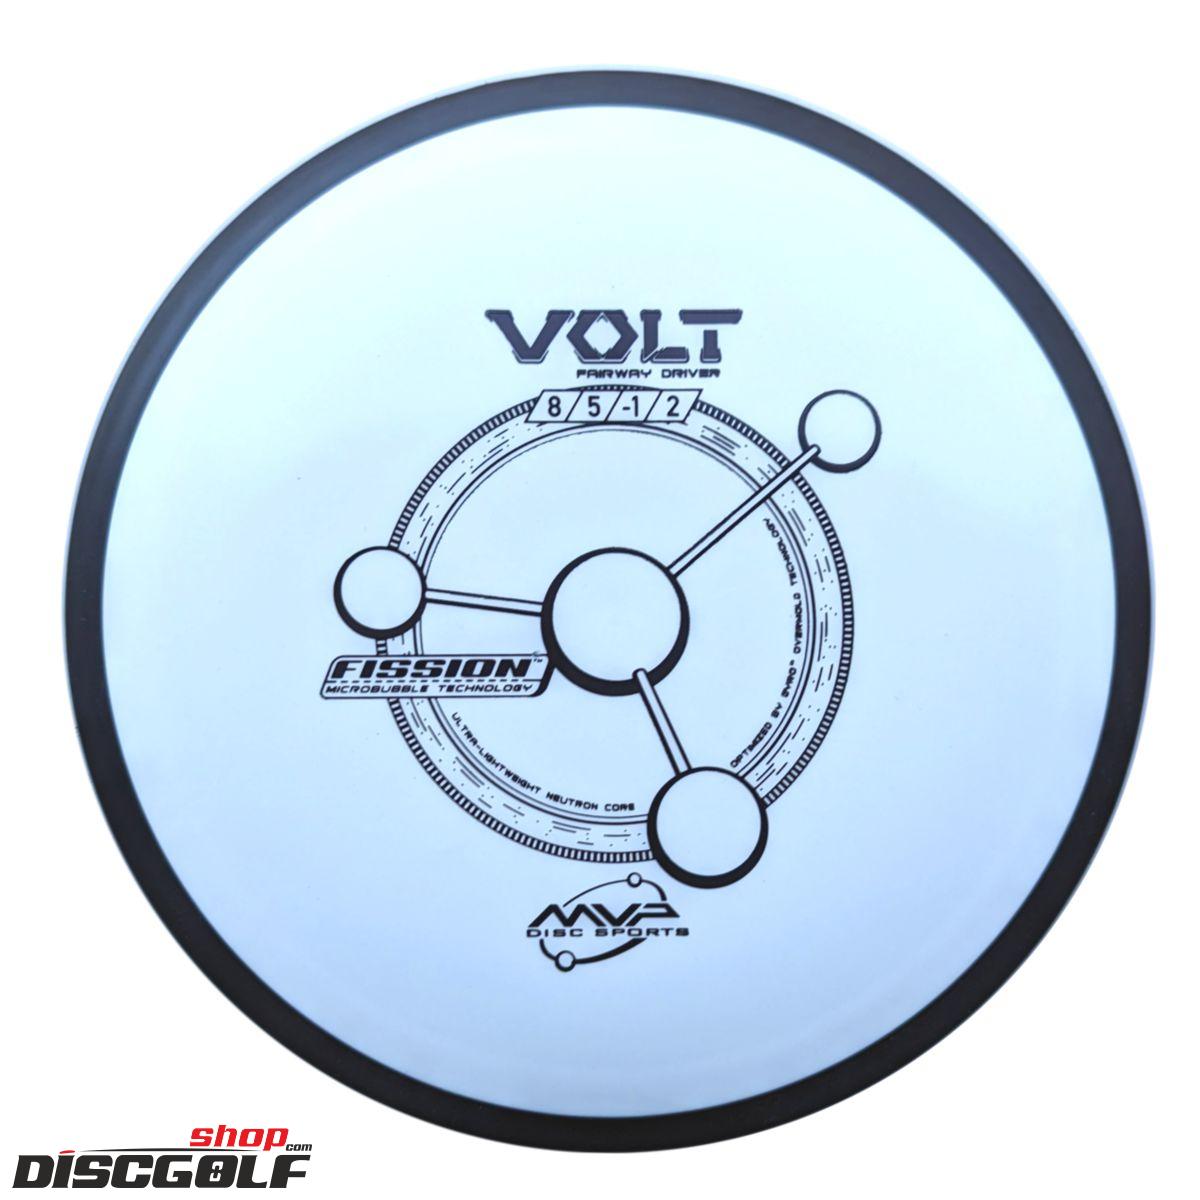 MVP Volt Fission (discgolf)